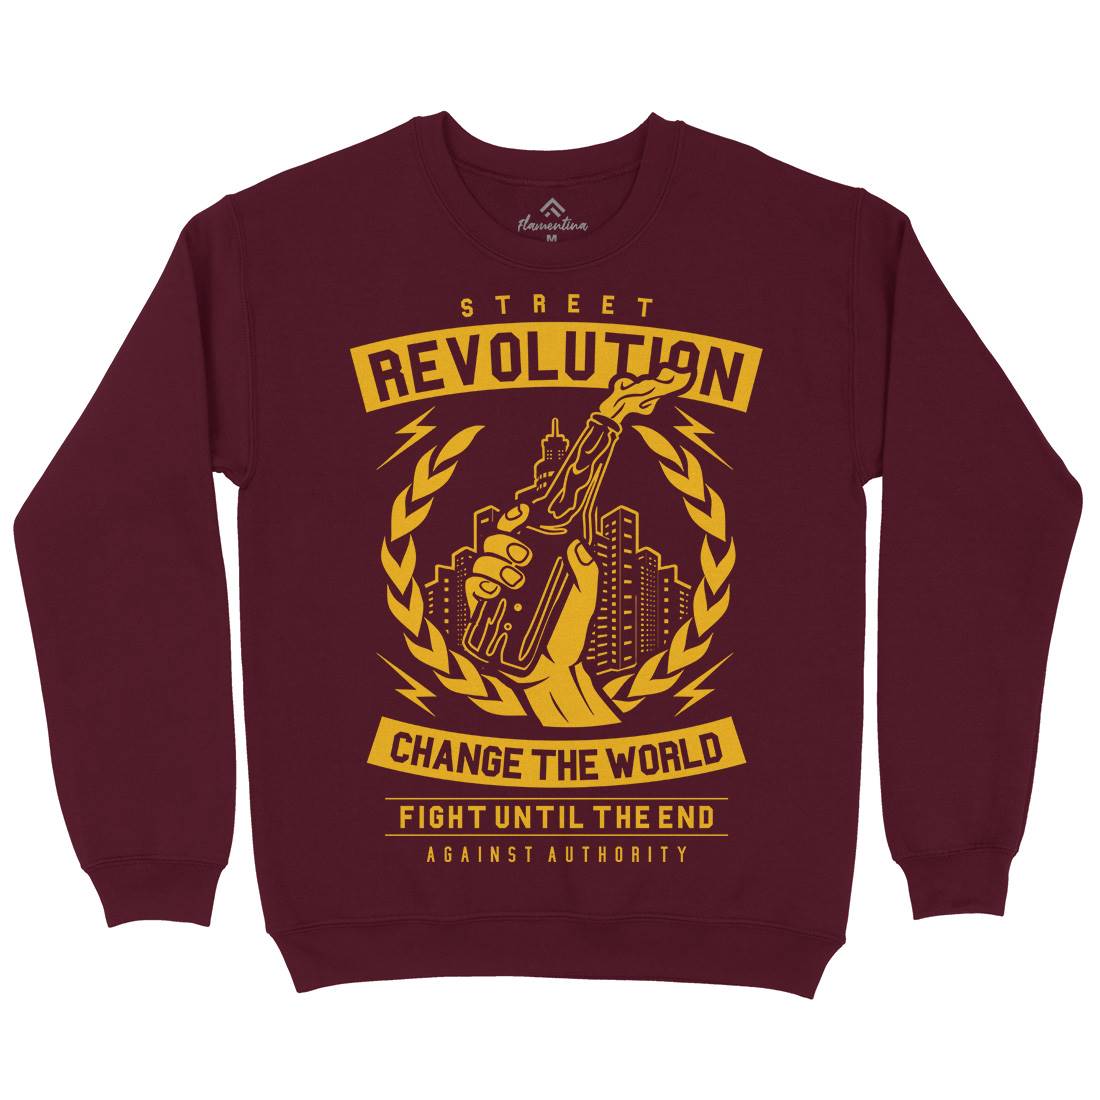 Street Revolution Kids Crew Neck Sweatshirt Quotes A287